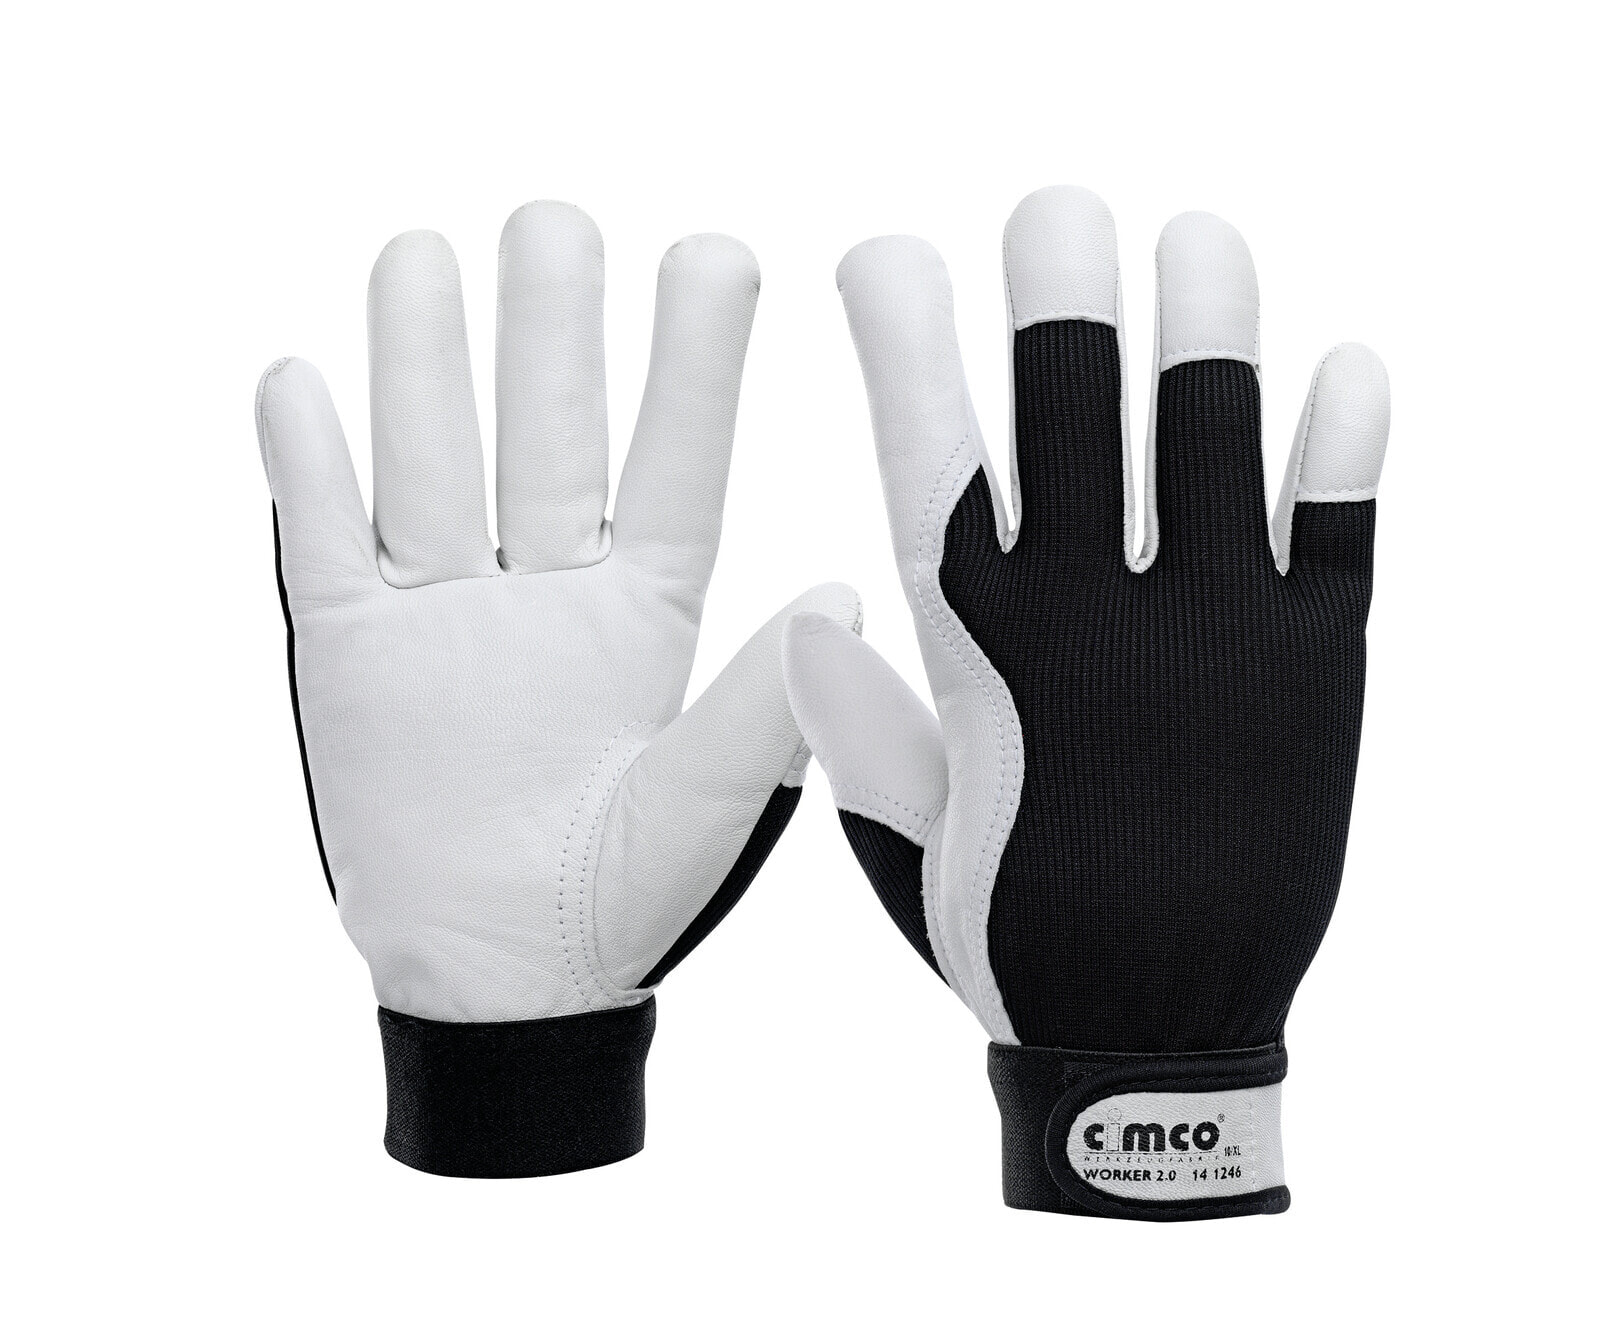 Cimco 141246 - Workshop gloves - Black - White - XL - EUE - Adult - Unisex